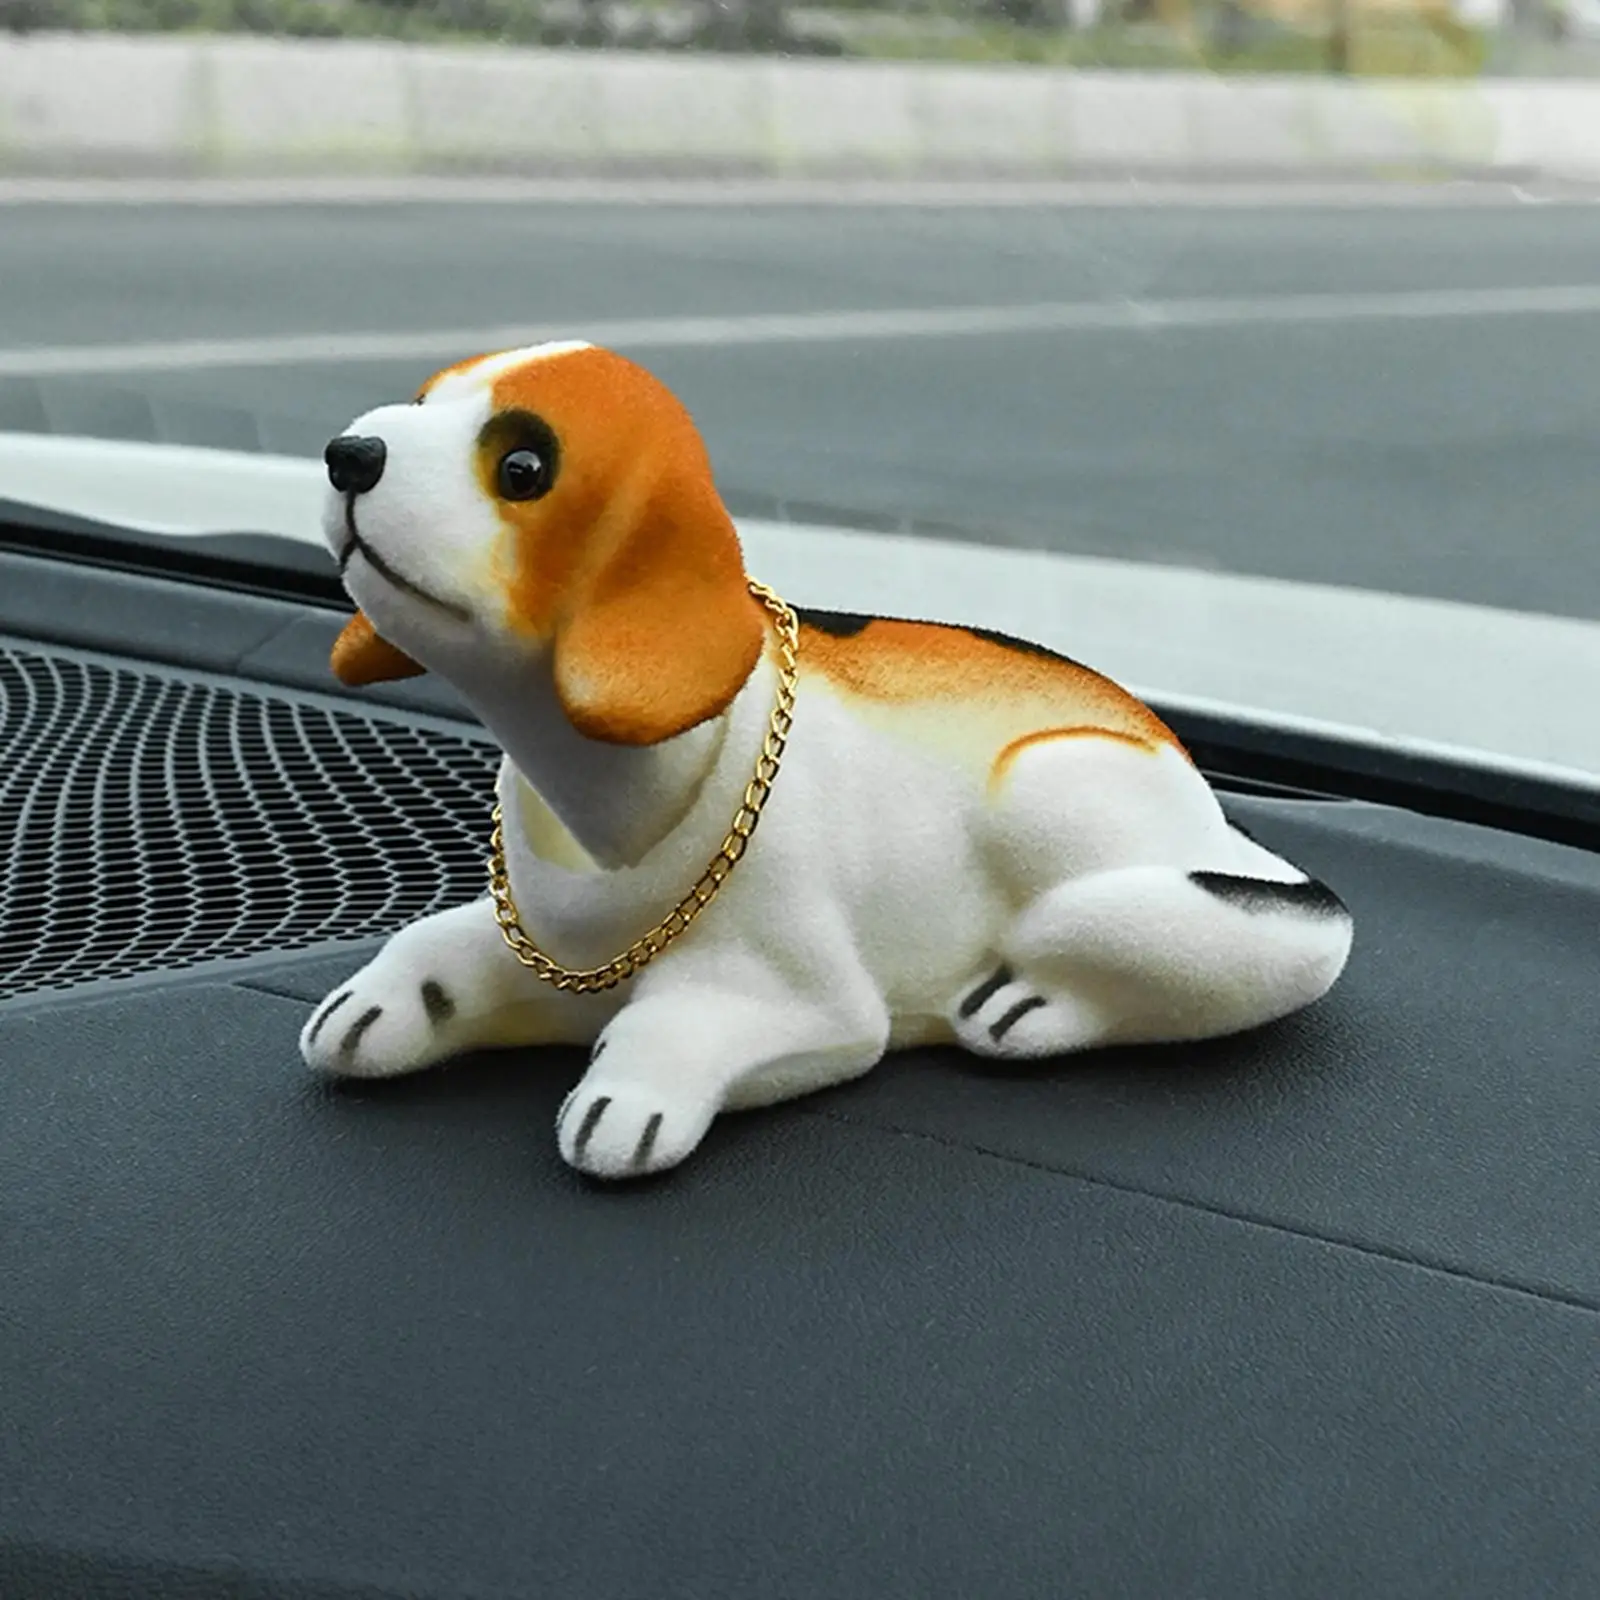 Cute Bobble Head Dog Figurine Model Puppy for Car Dashboard Ornament Toys